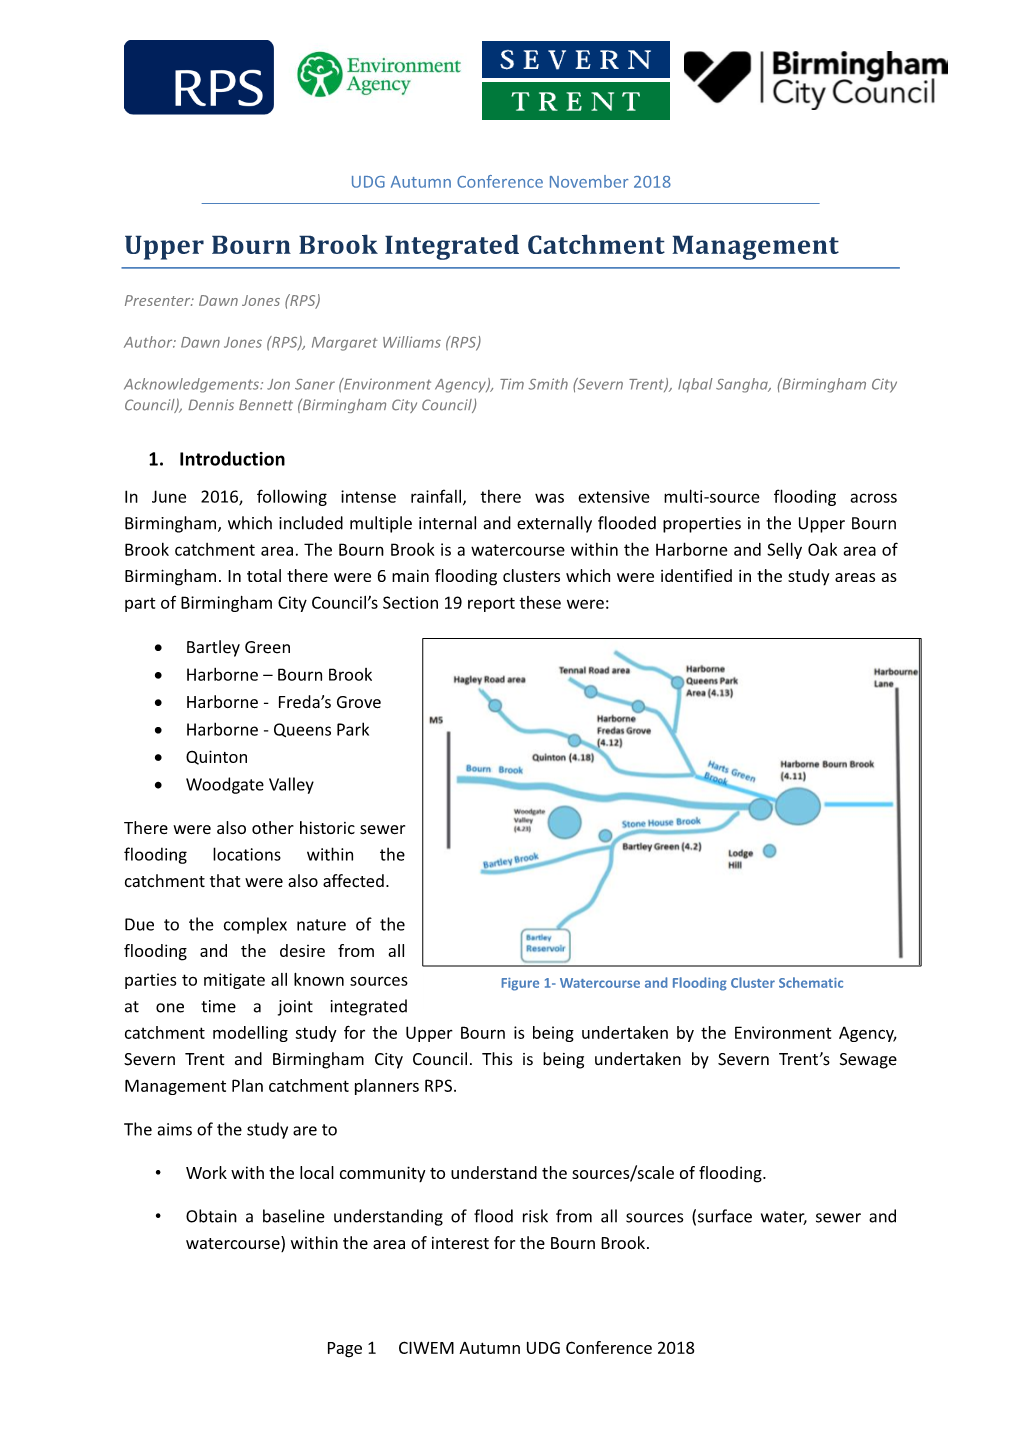 Upper Bourn Brook Integrated Catchment Management